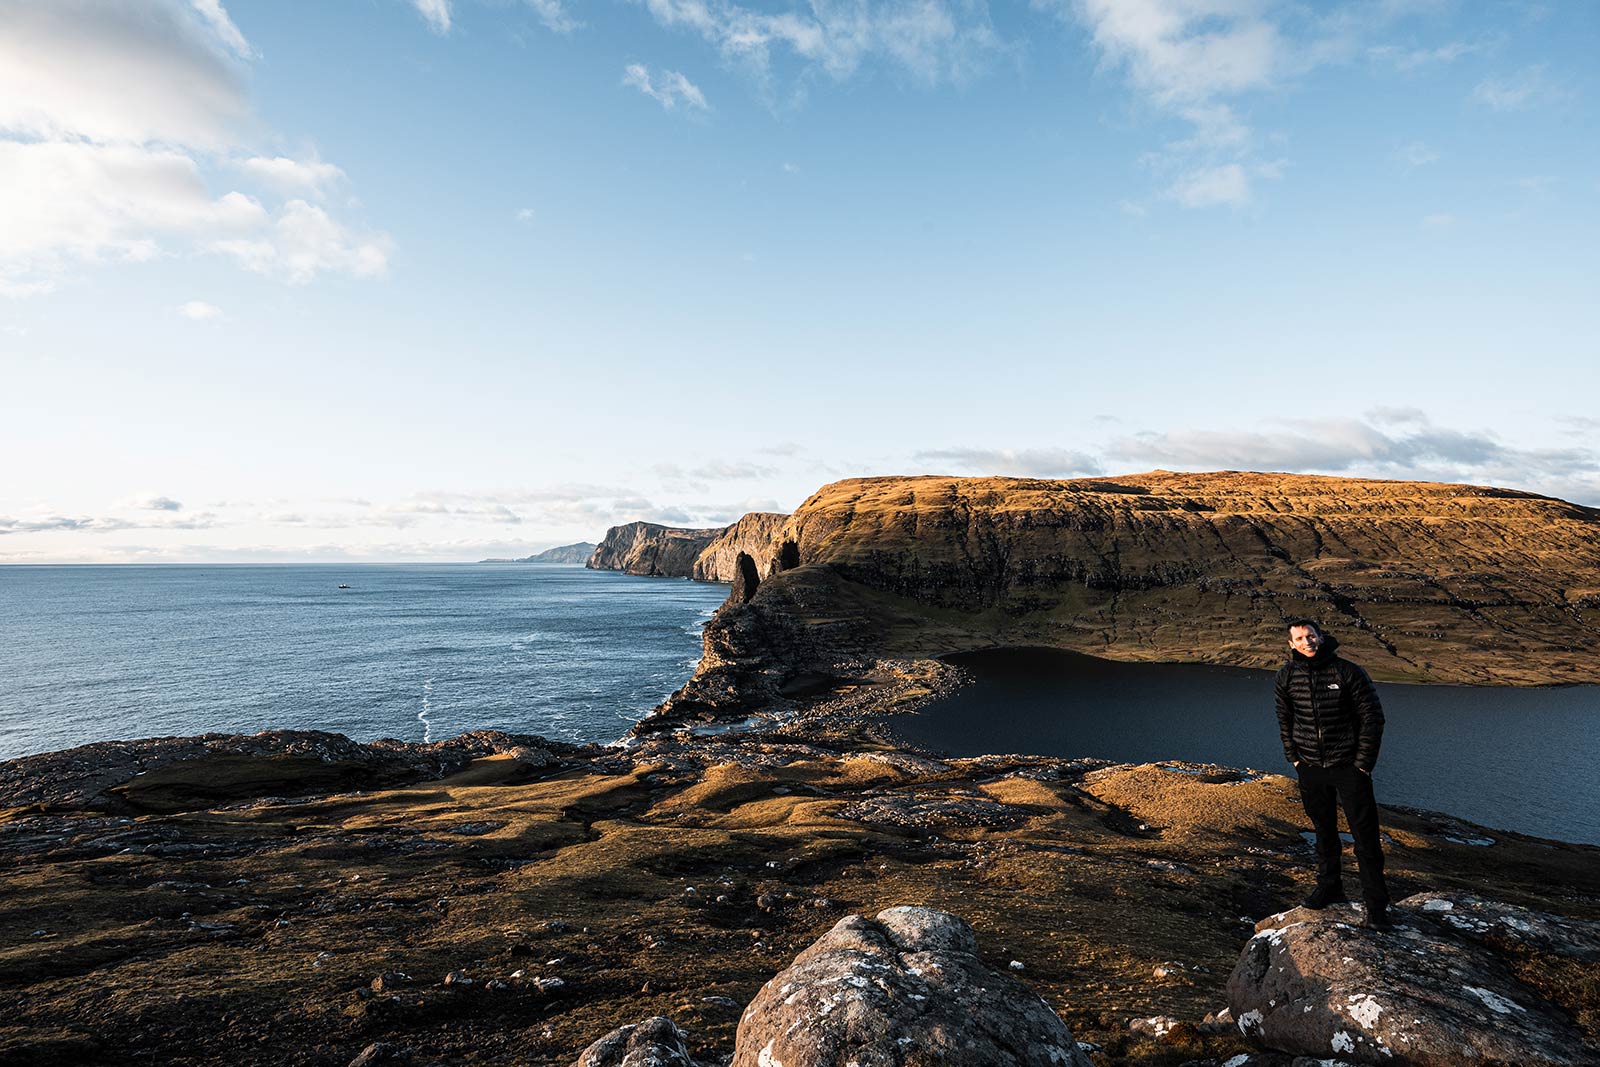 David Simpson at Vagar Islands in Faroe Islands. The Faroe Islands has me